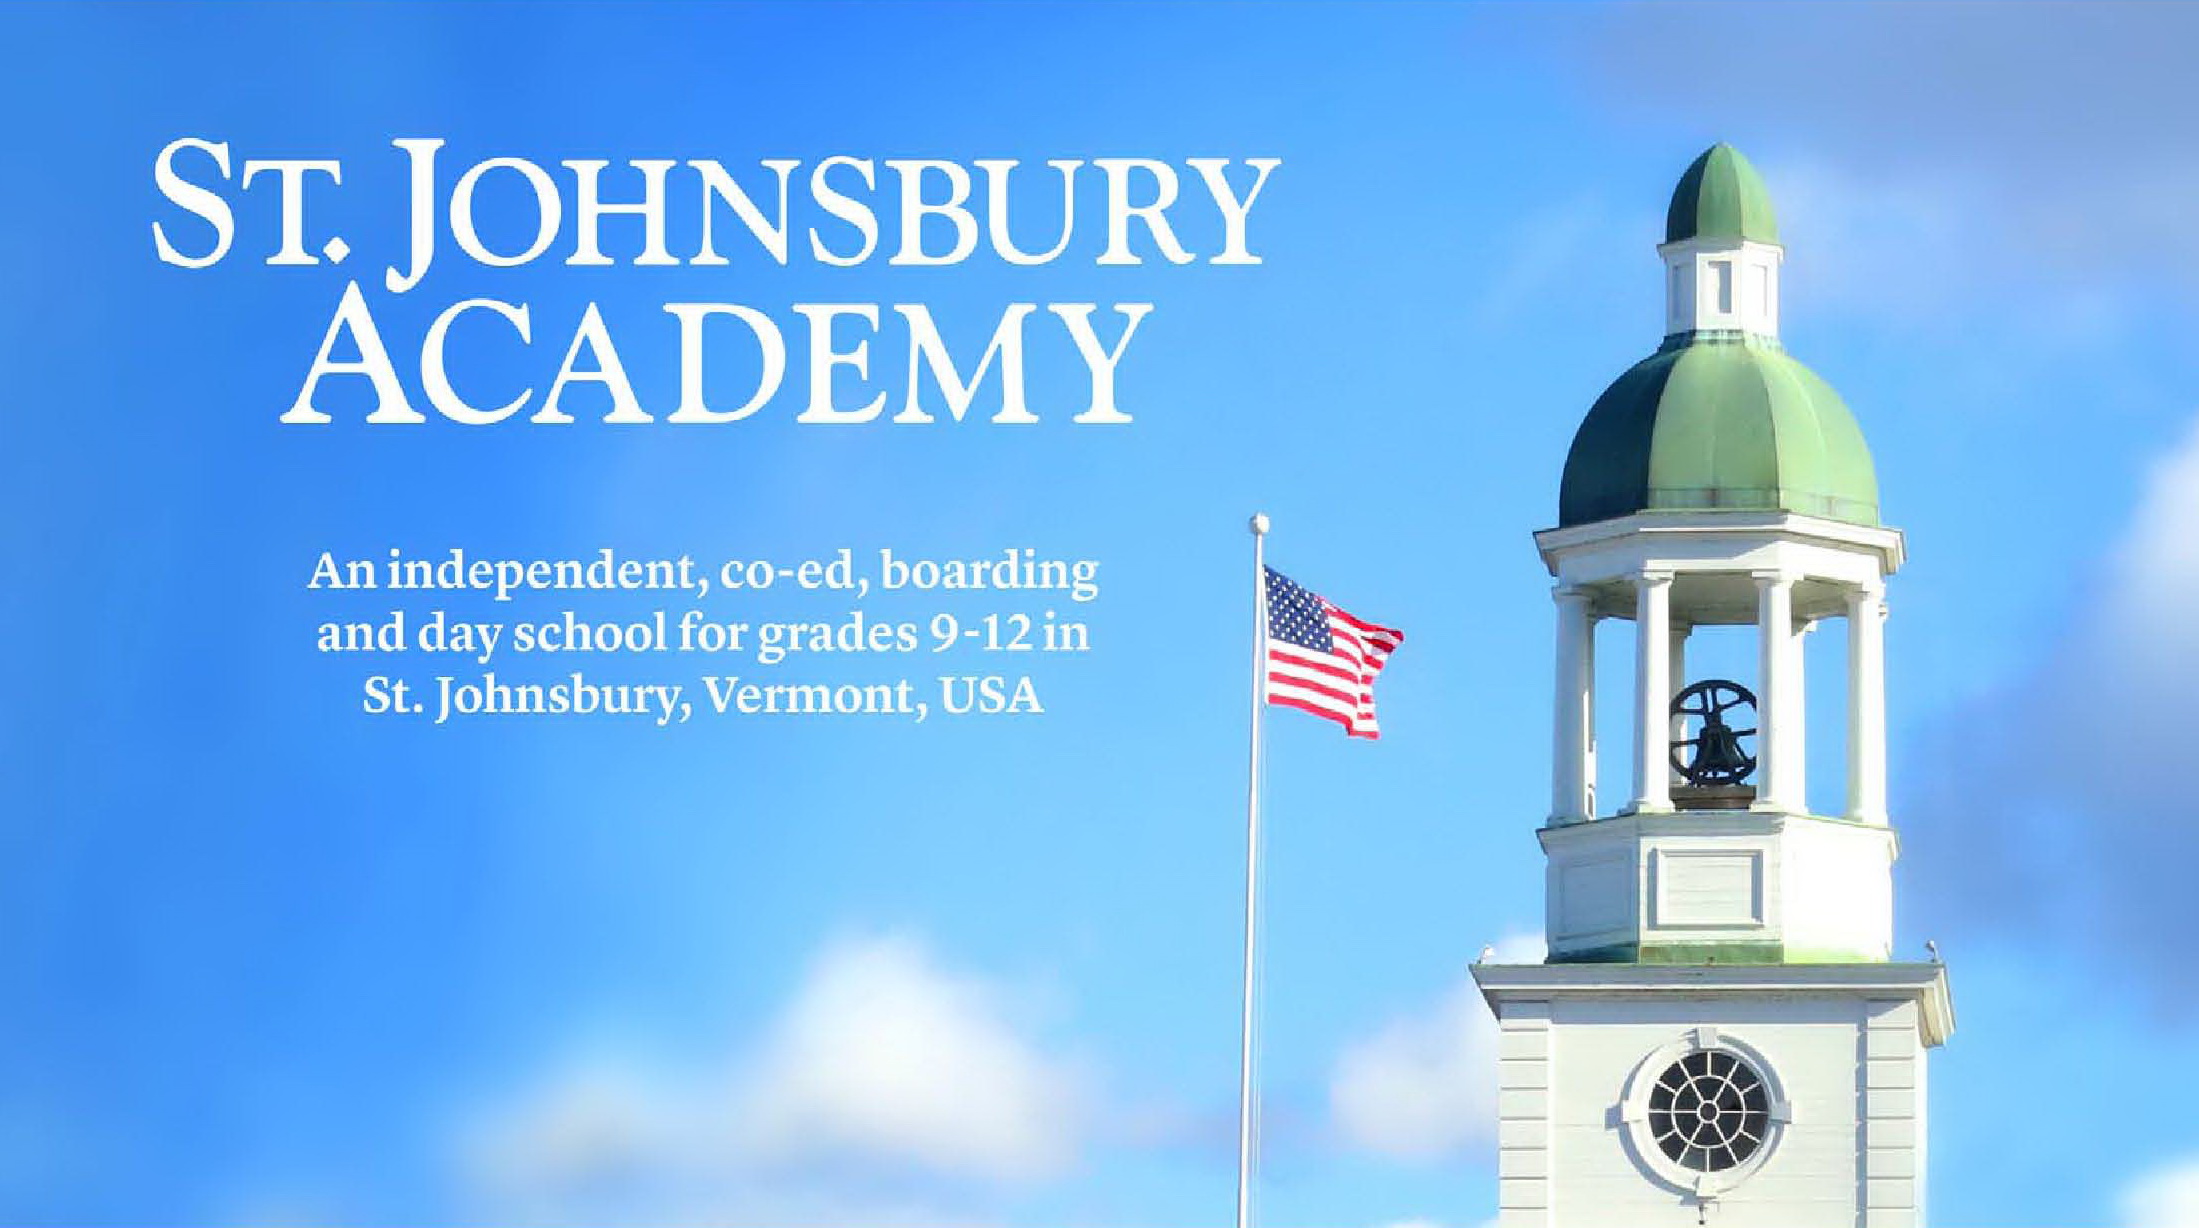 St. Johnsbury Academy圣约翰博睿学院--全美数学理科竞赛常胜军、顶尖大学培育英才摇篮、新英格兰区顶尖学术寄宿学校